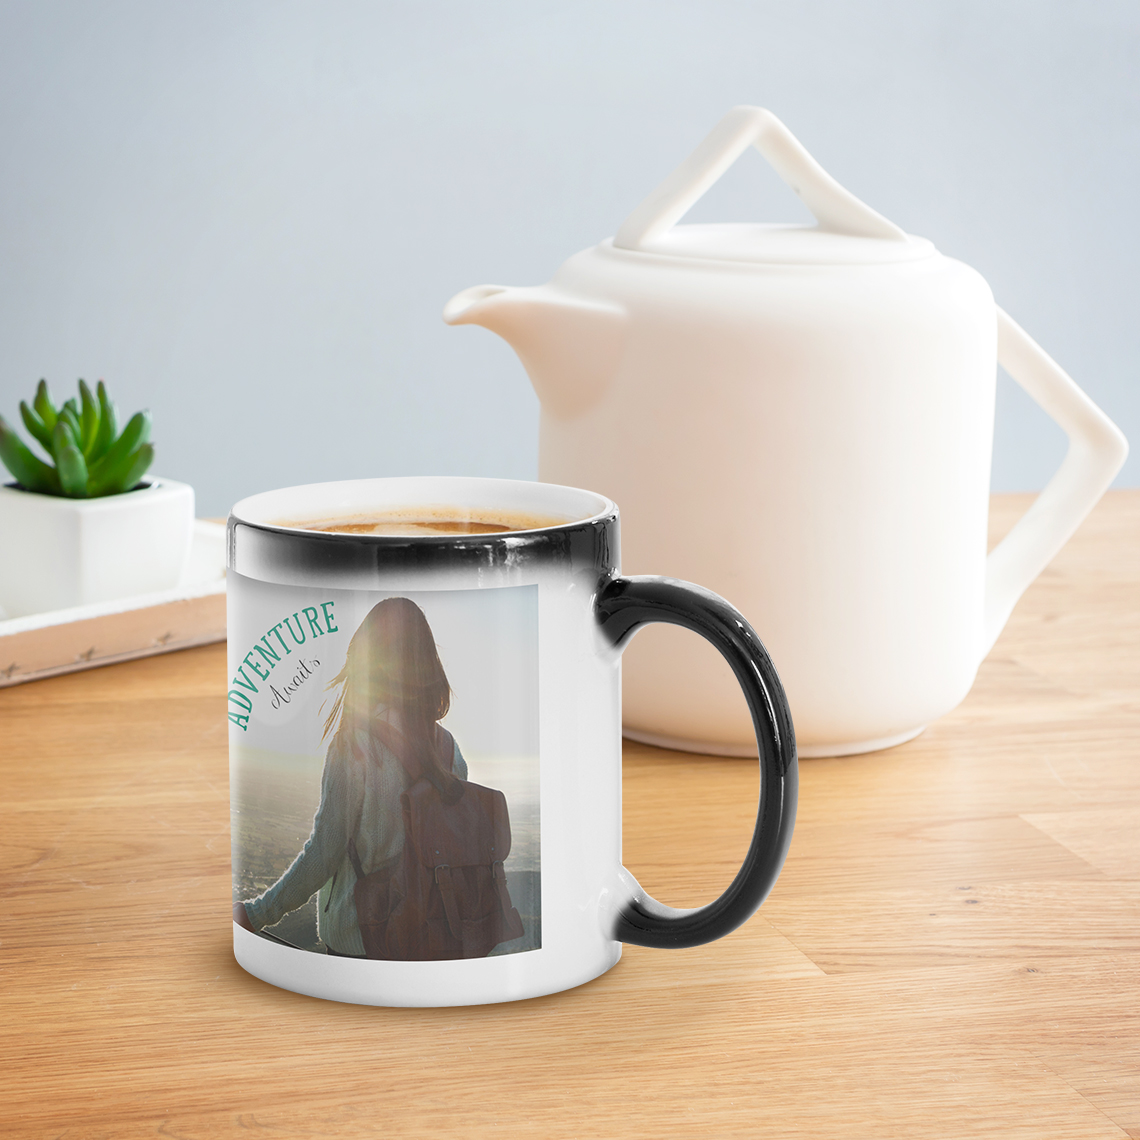 Créez un mug magique avec vos propres photos